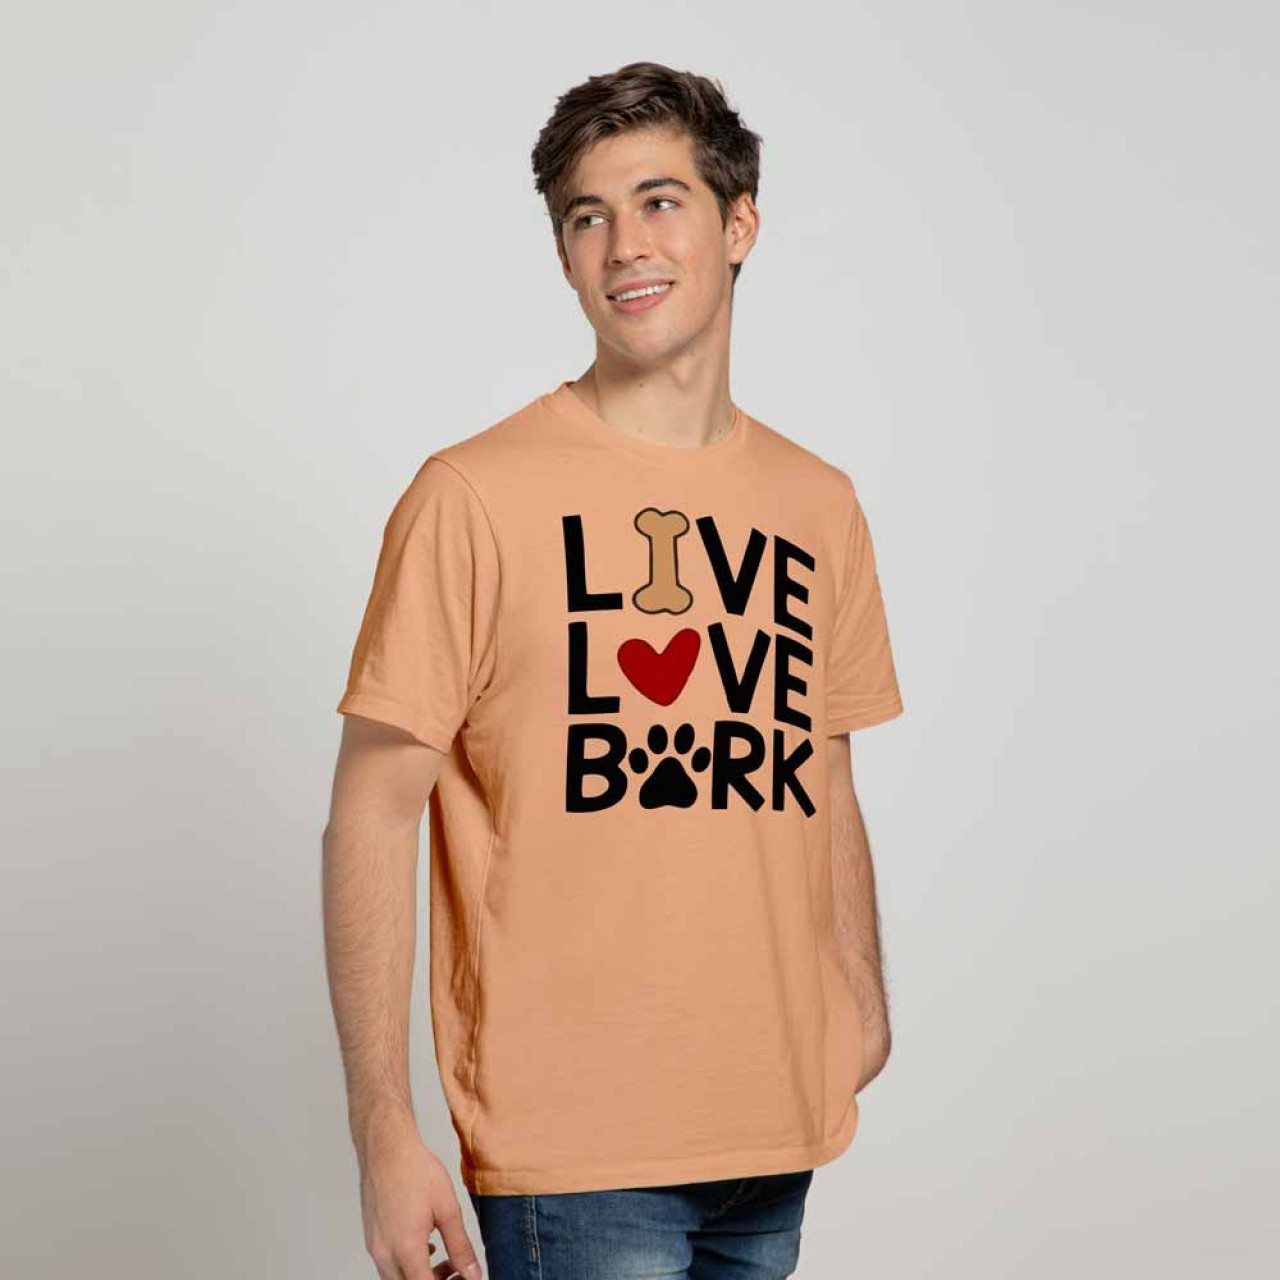 Live Love Bark Cotton T-Shirt For Men